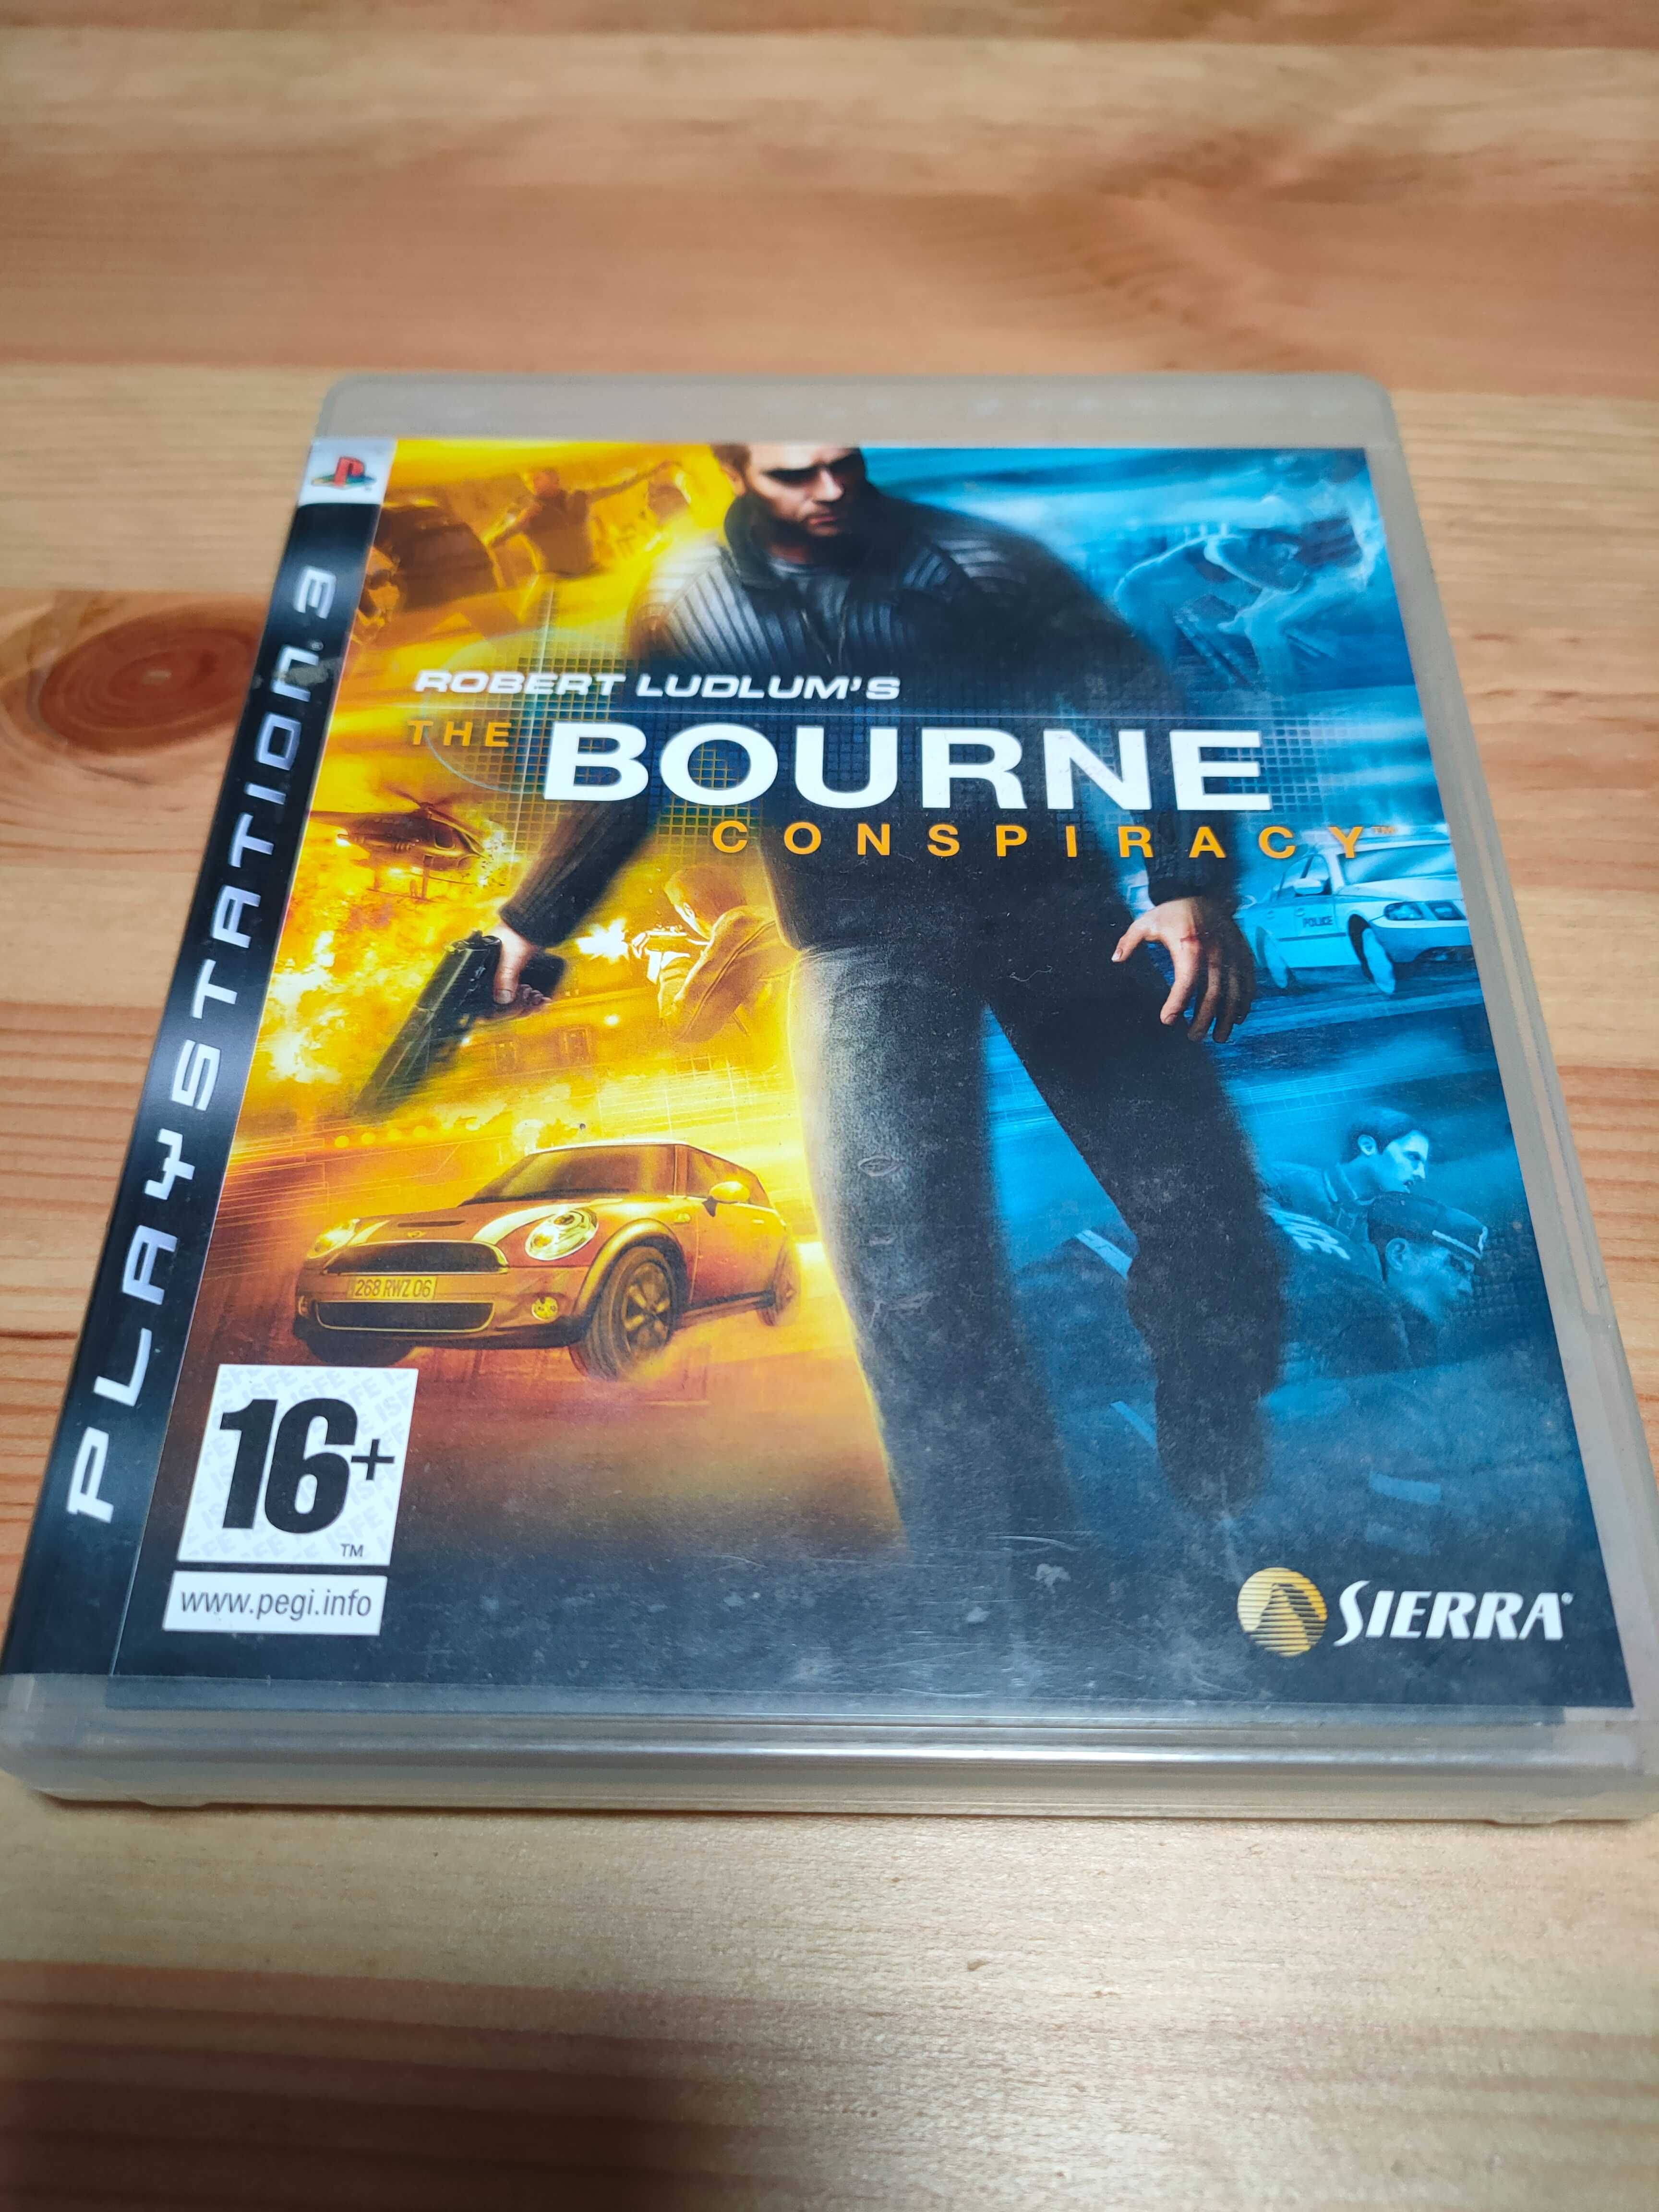 The Bourne Conspiracy Robert Ludlum’s PS3